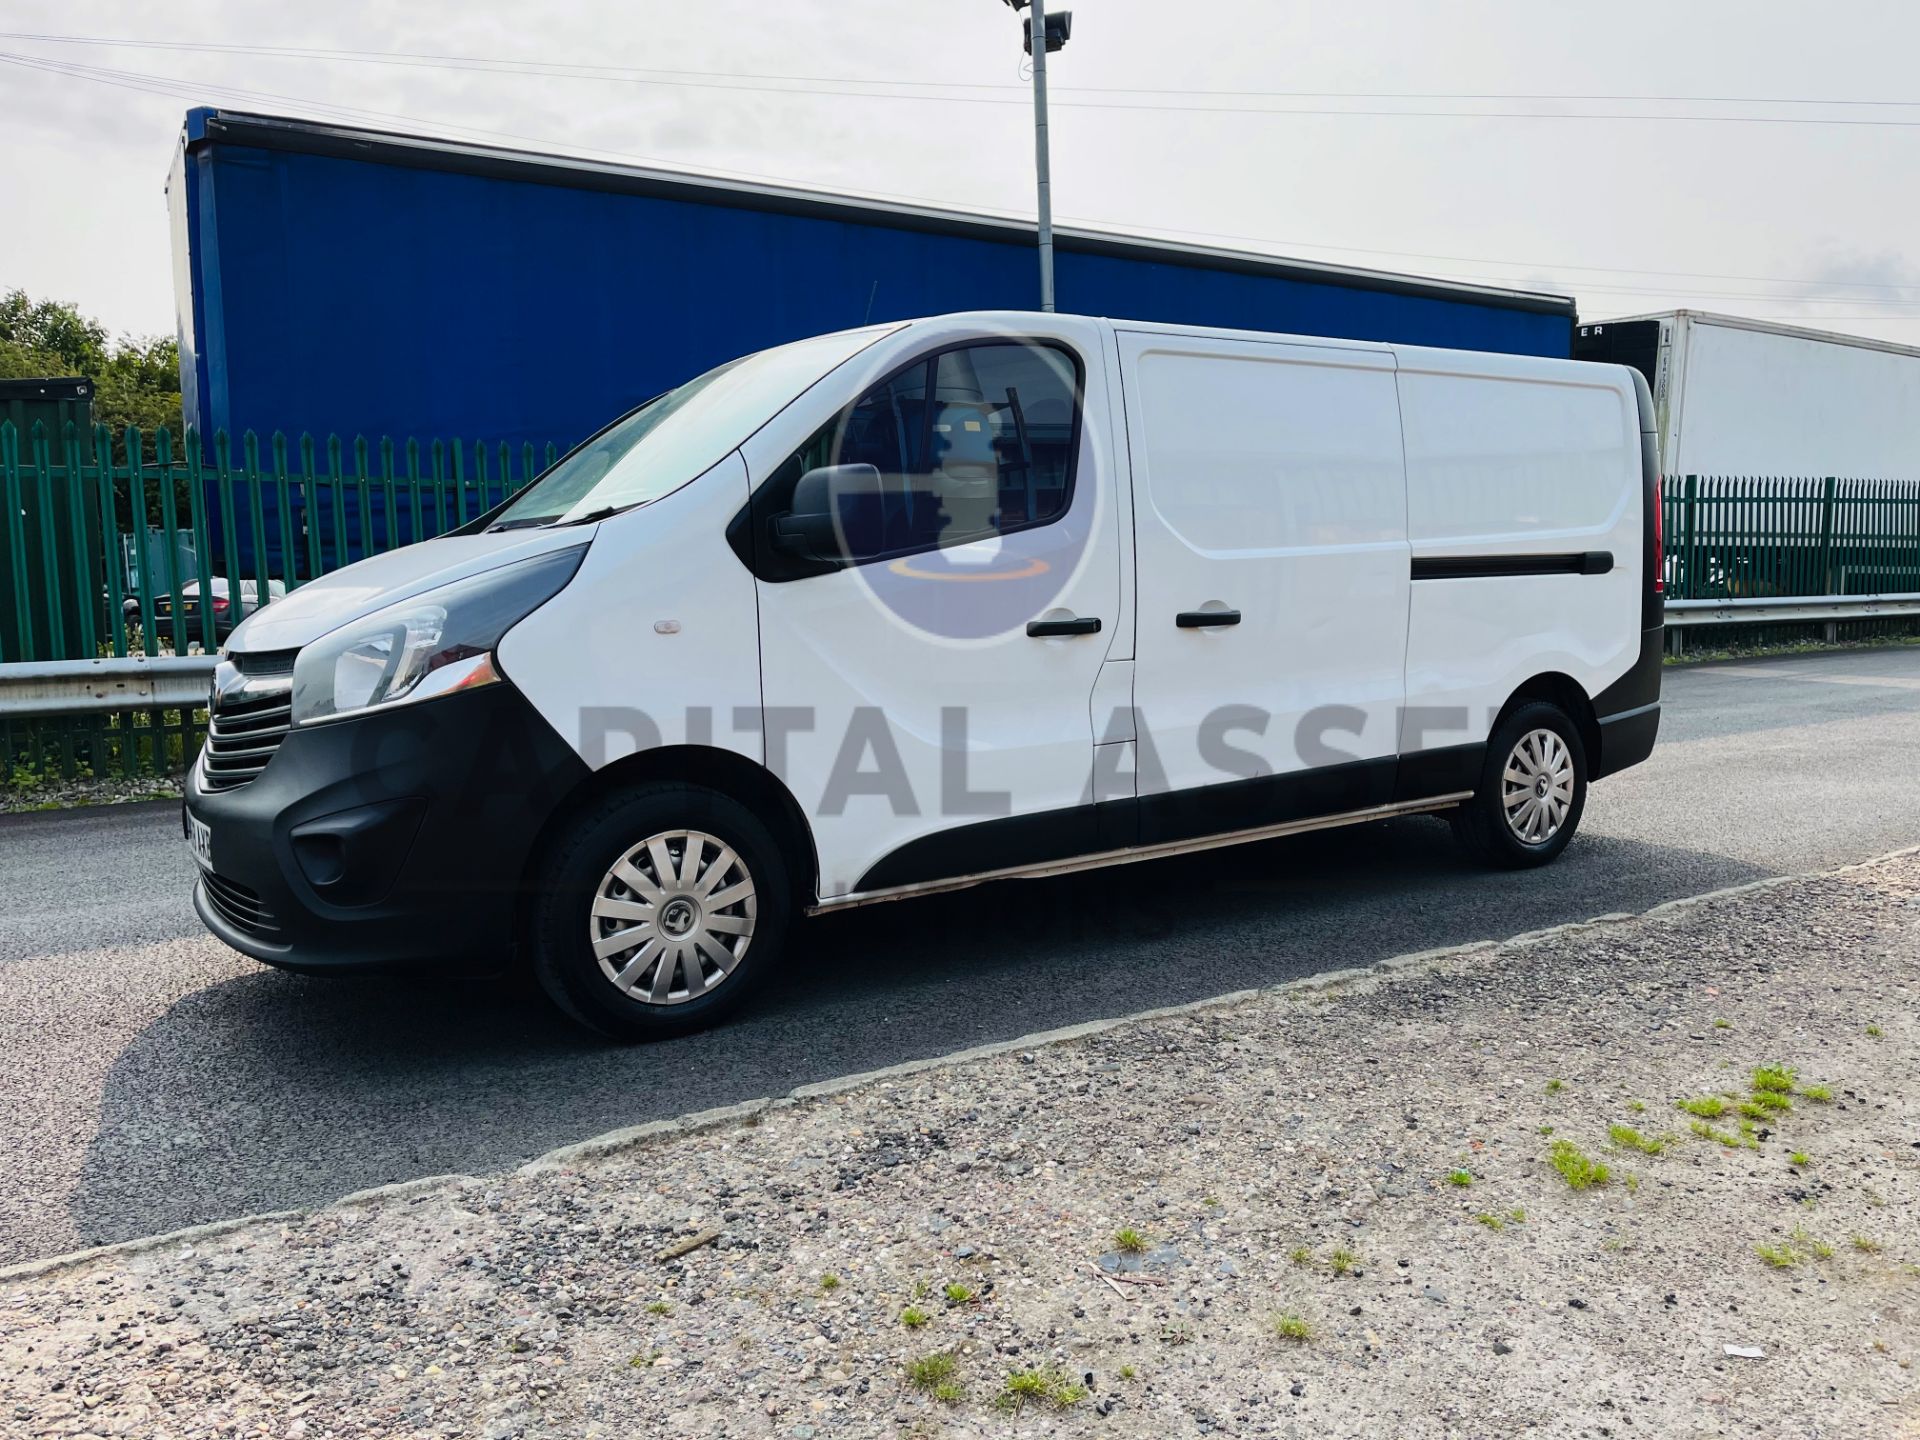 (RESERVE MET)Vauxhall Vivaro 1.6Cdti (120) Long Wheel Base 2019 Model - Only 102K Miles - Euro 6 - - Image 5 of 20